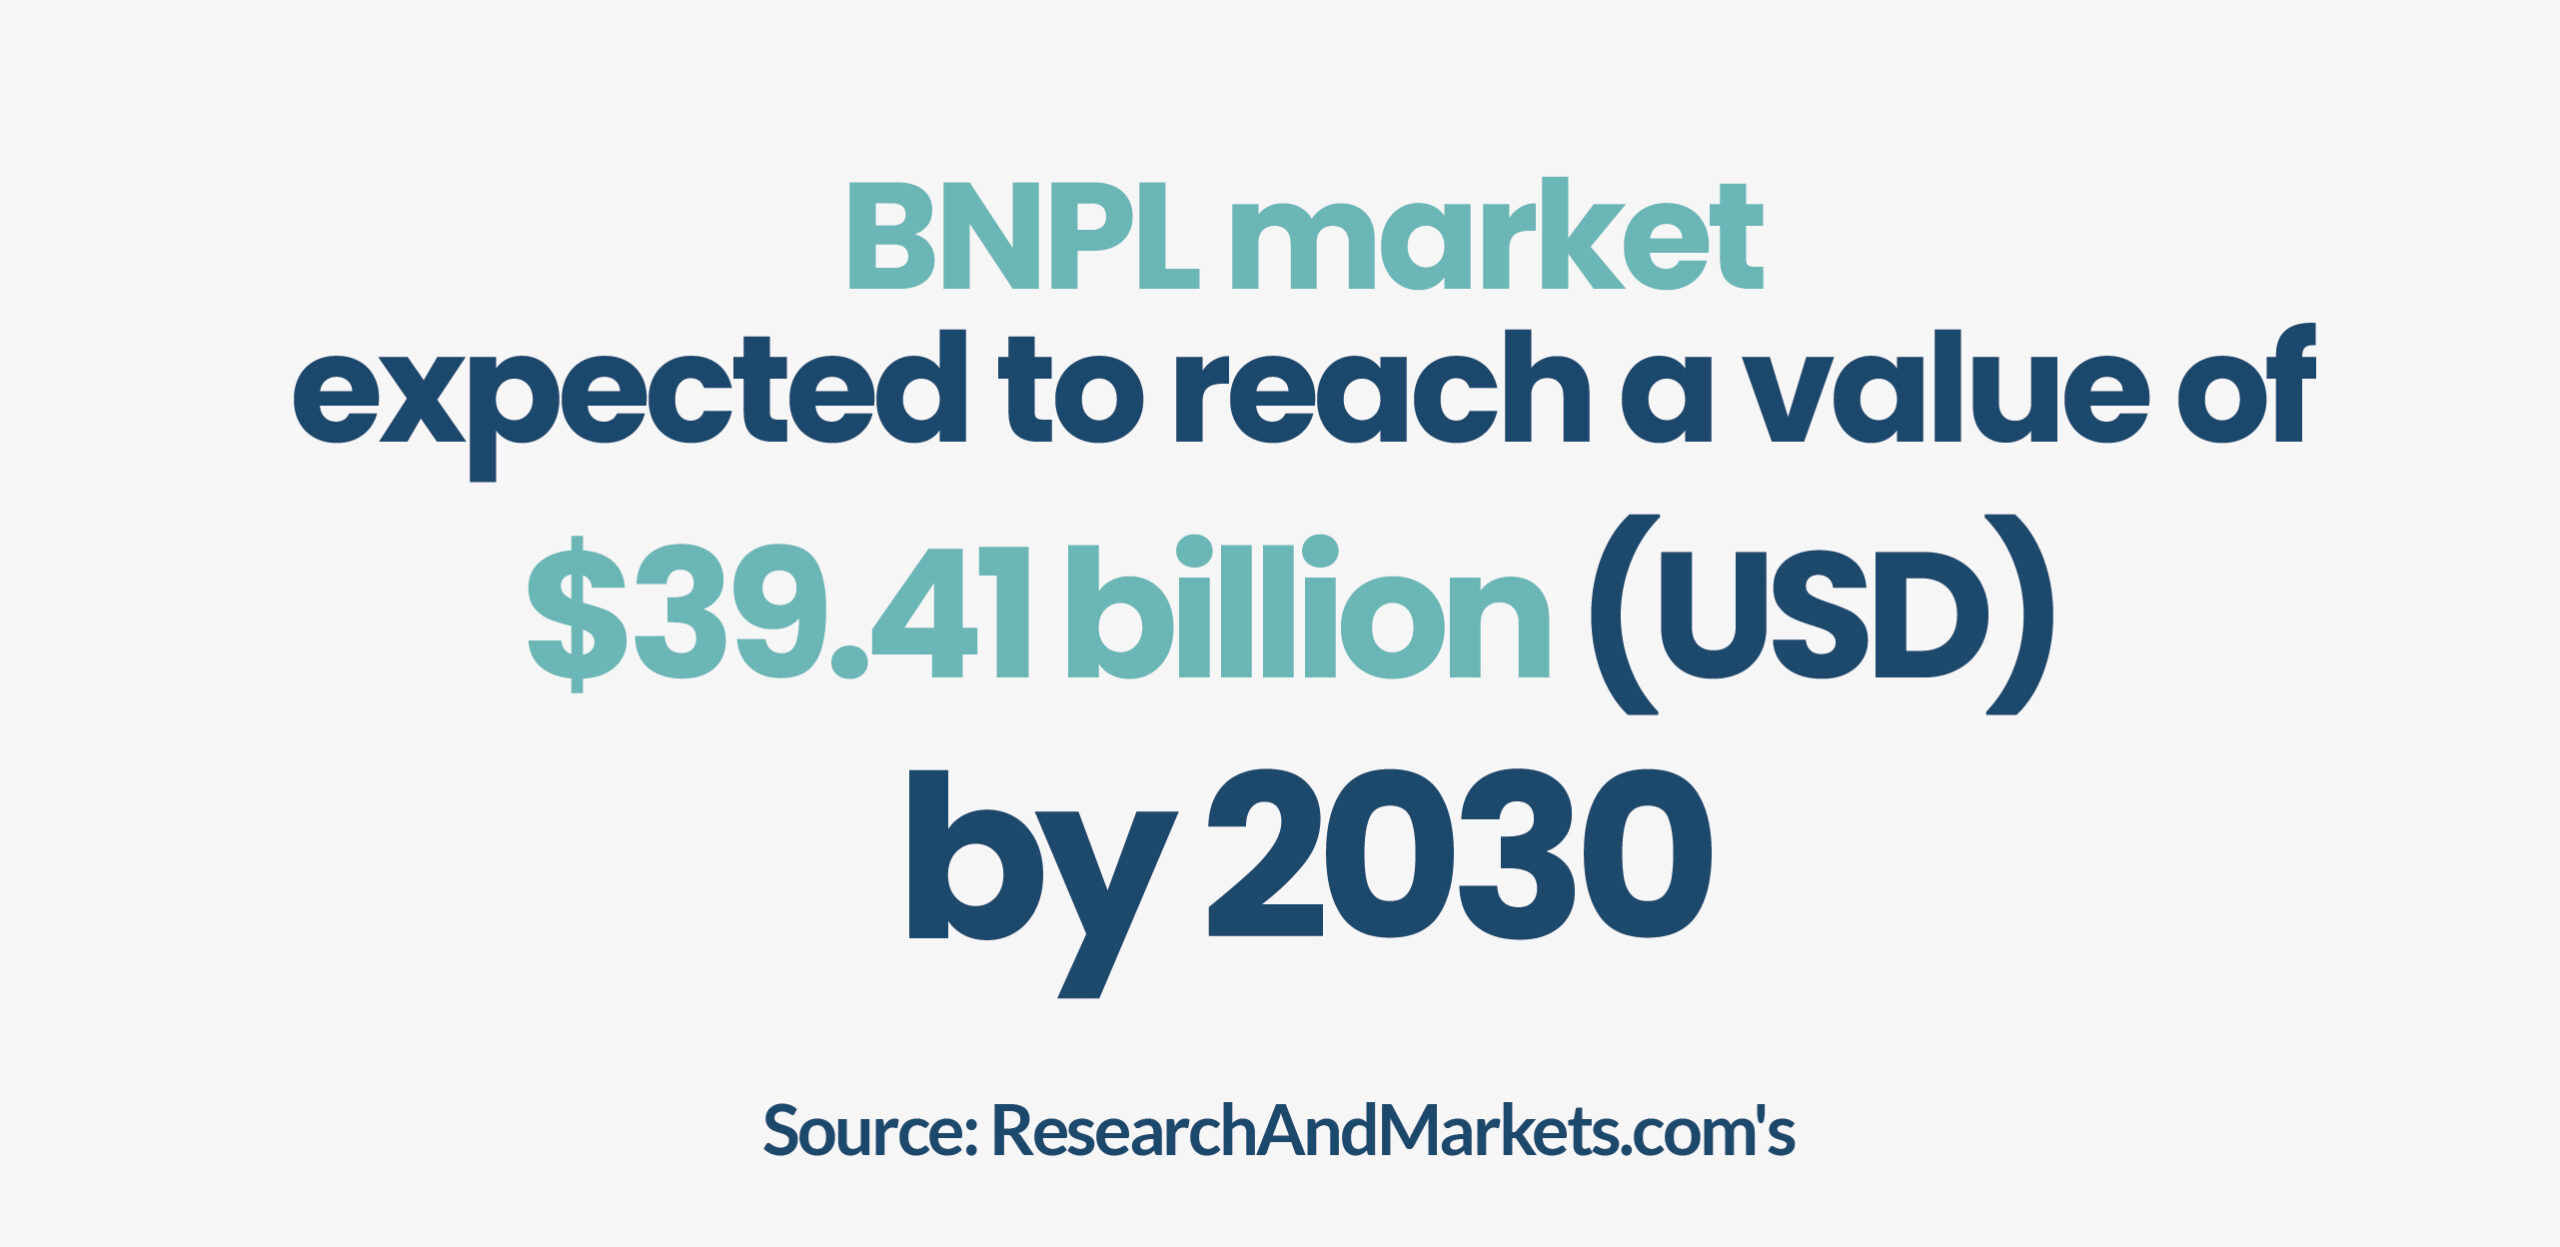 BNPL market